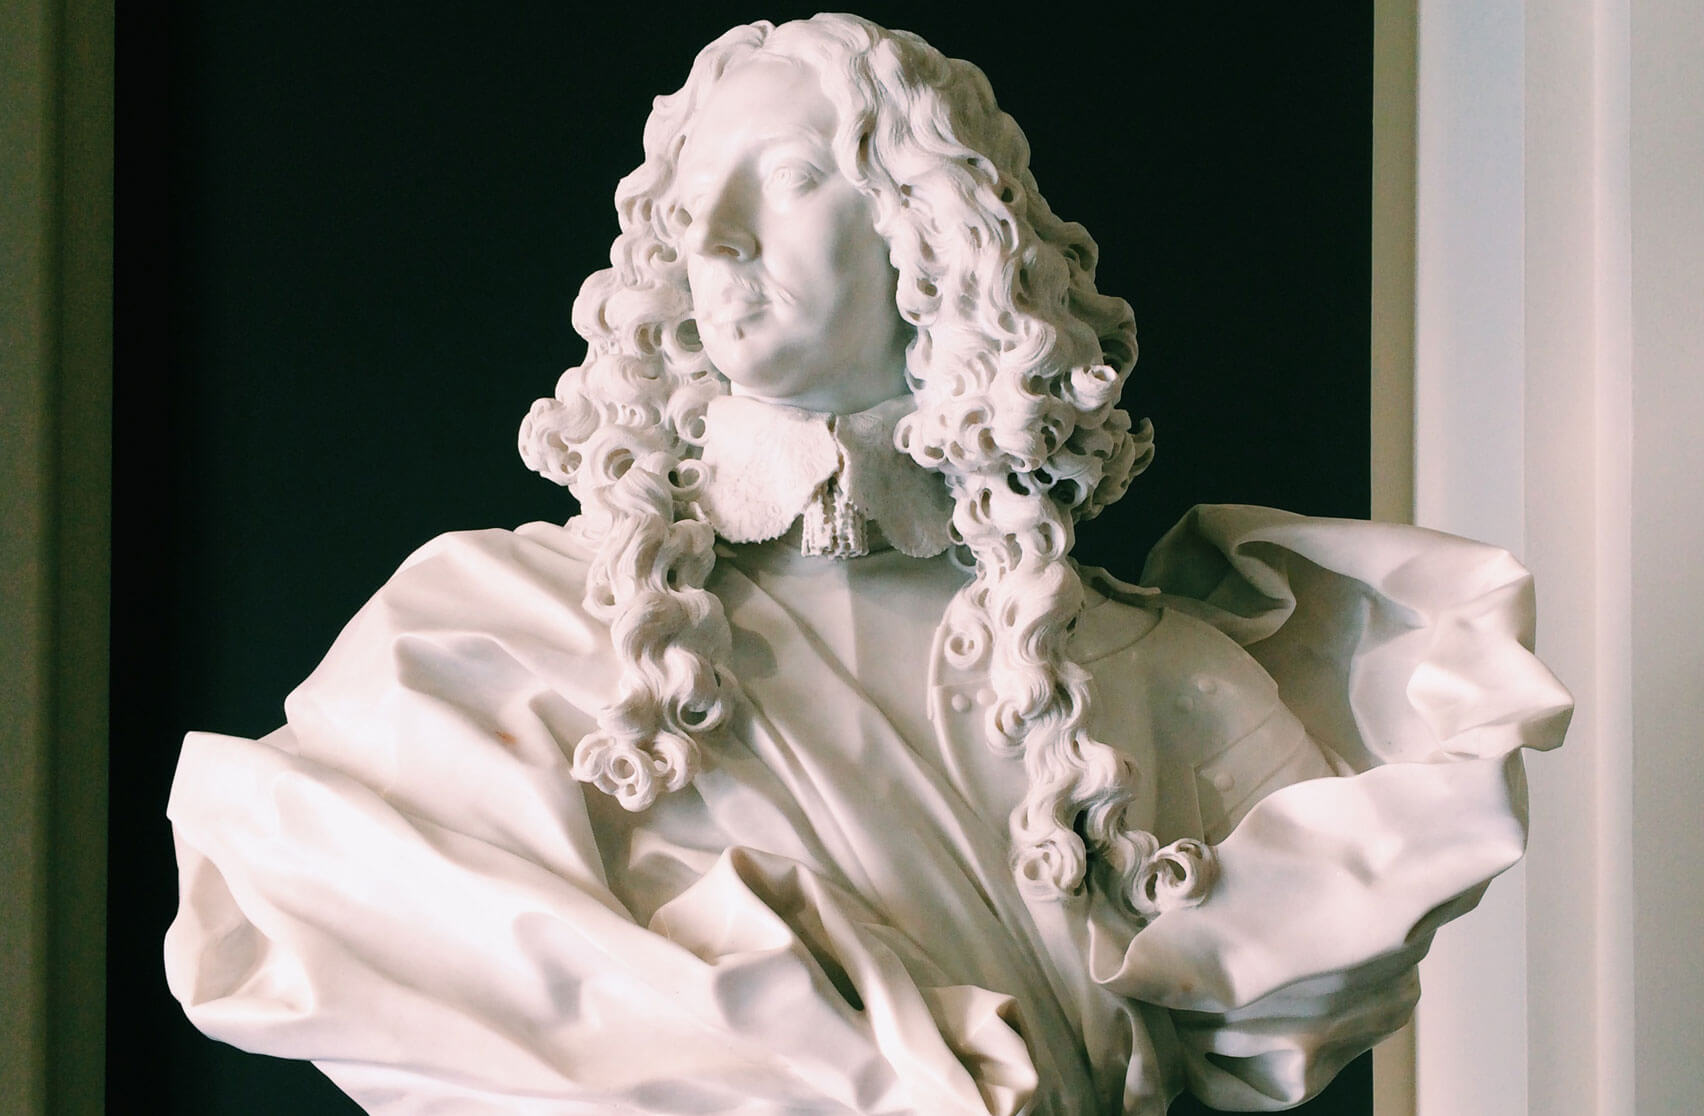 Estense Gallery in Modena - the beautiful marble bust of Francesco I d'Este by Bernini